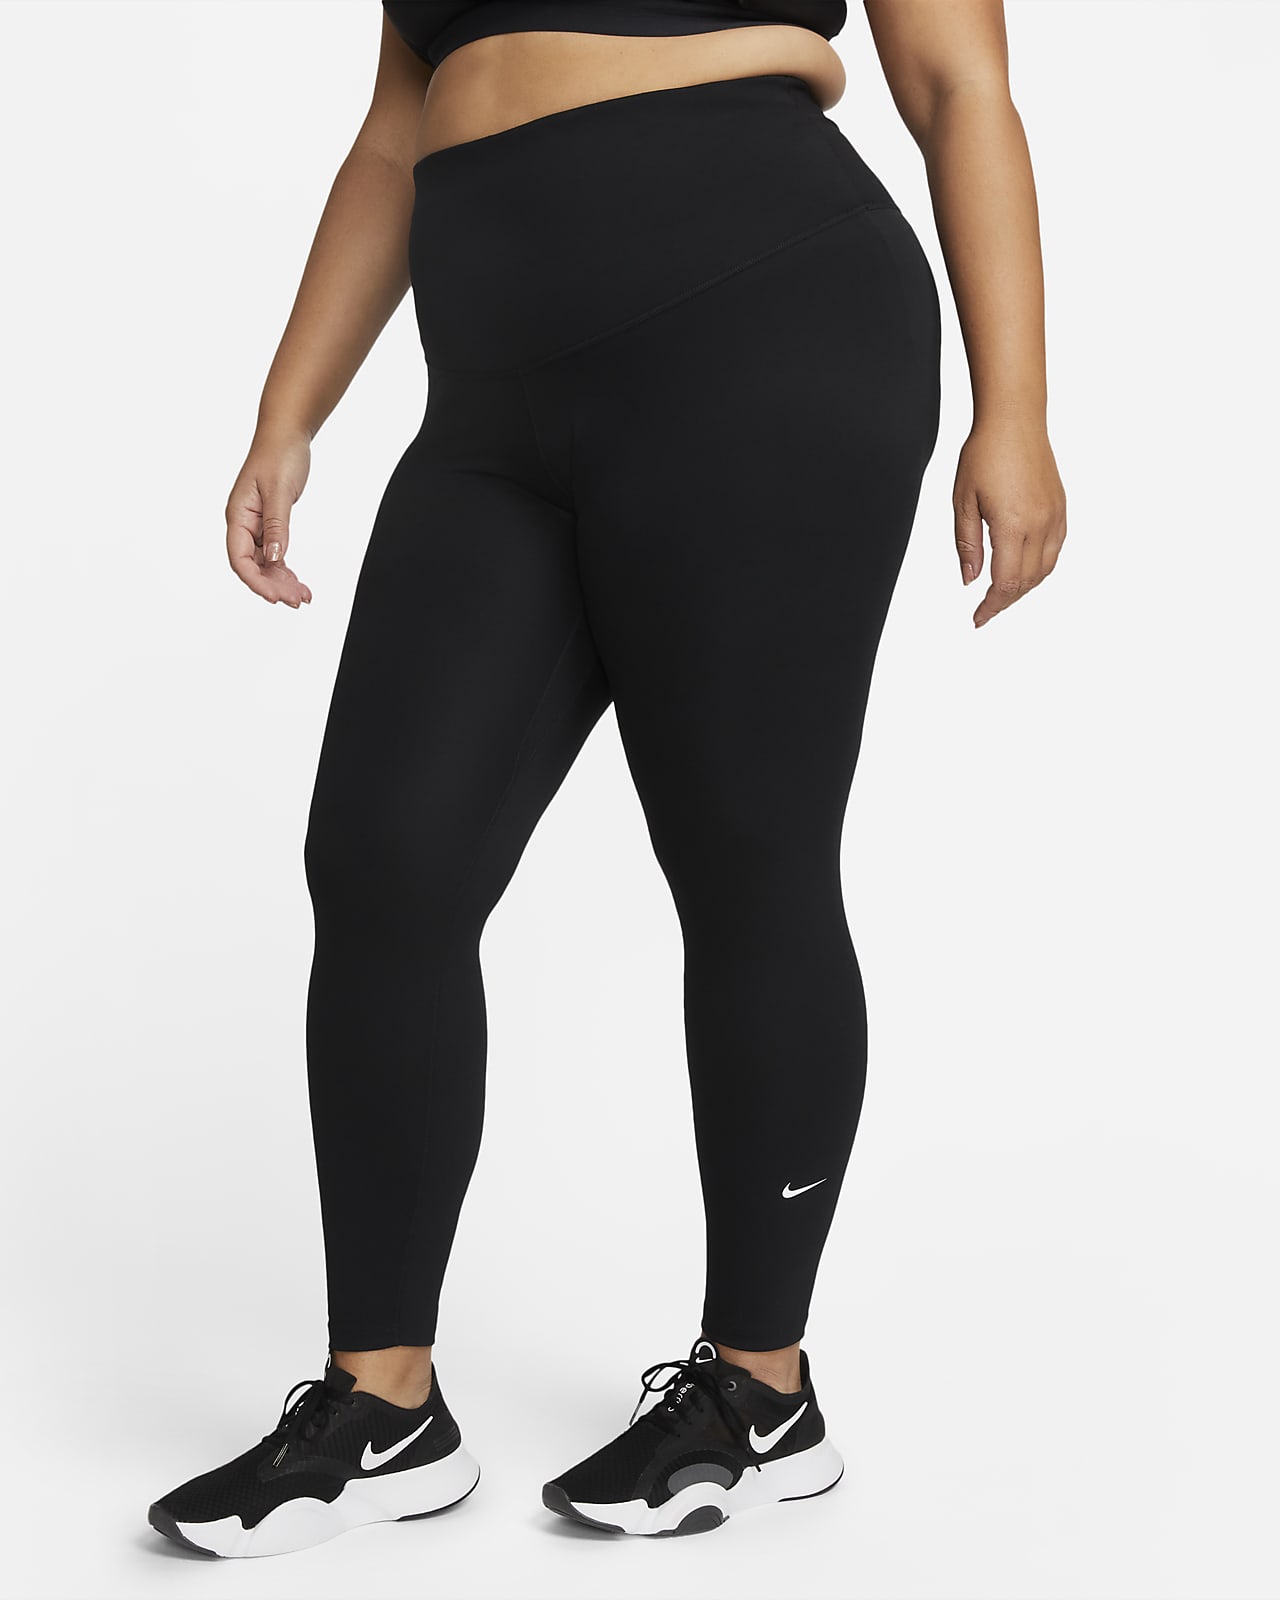 Nike One magas derekú női leggings (plus size méret)